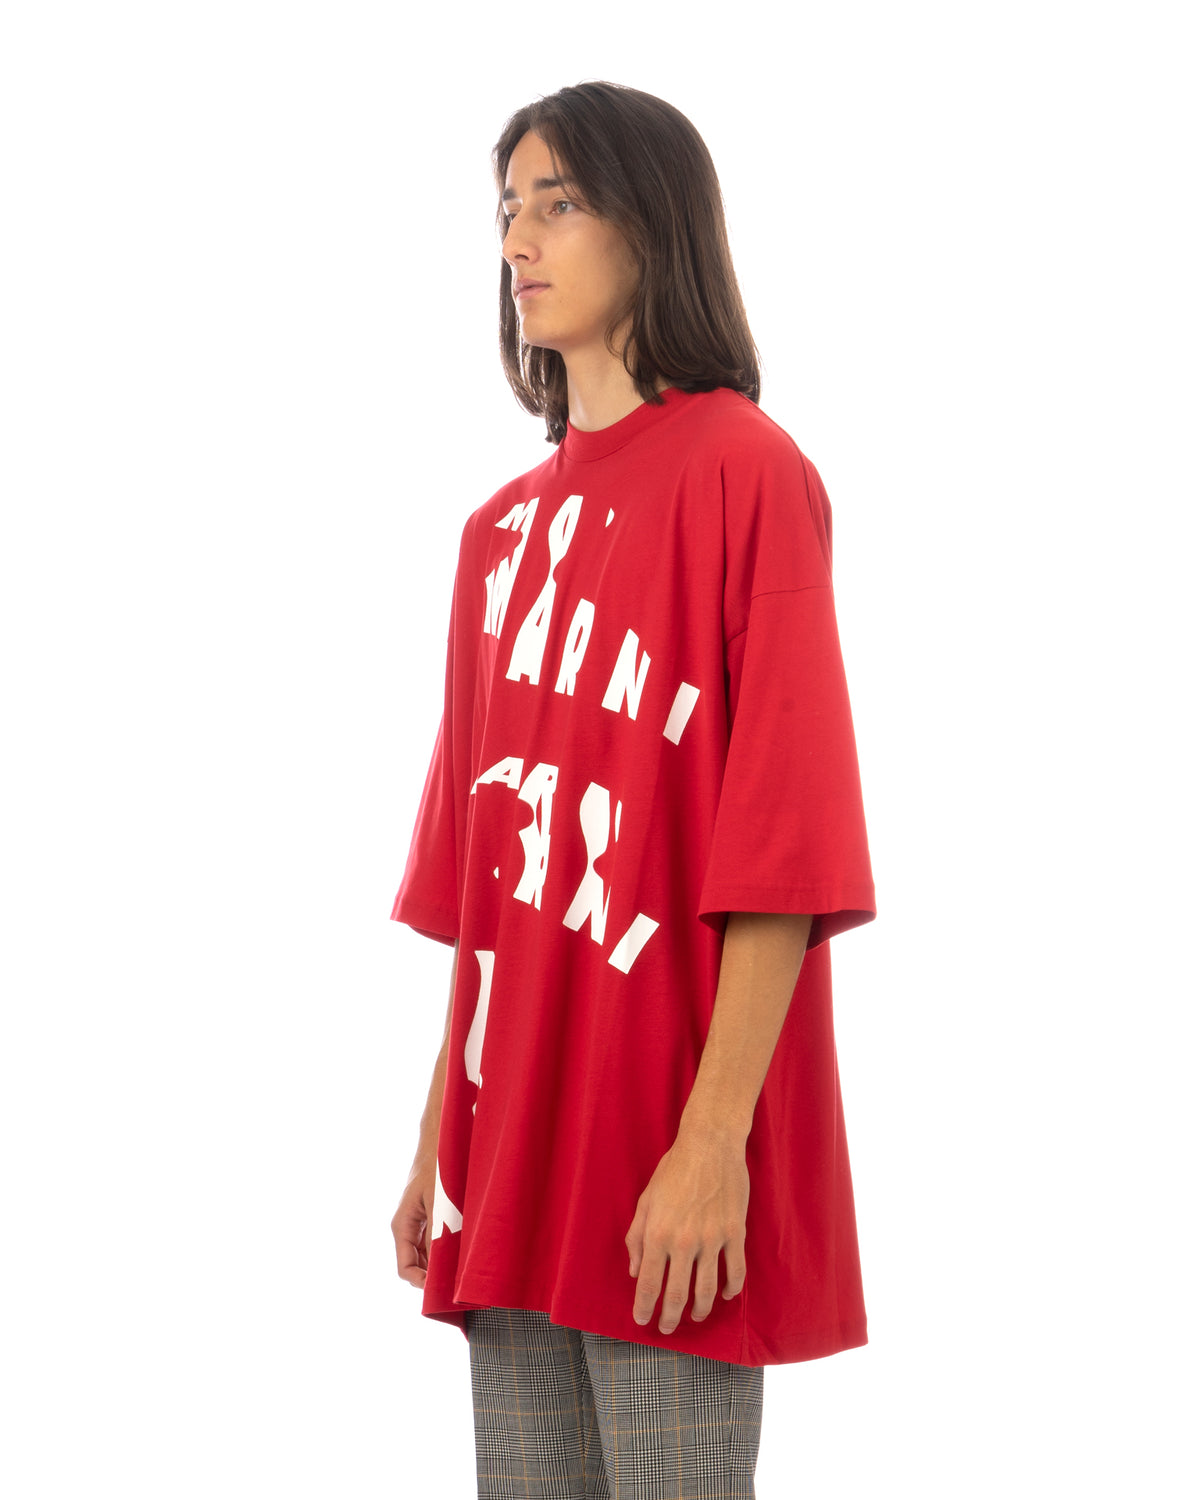 Marni | Scanned Logo T-Shirt Crimson - Concrete